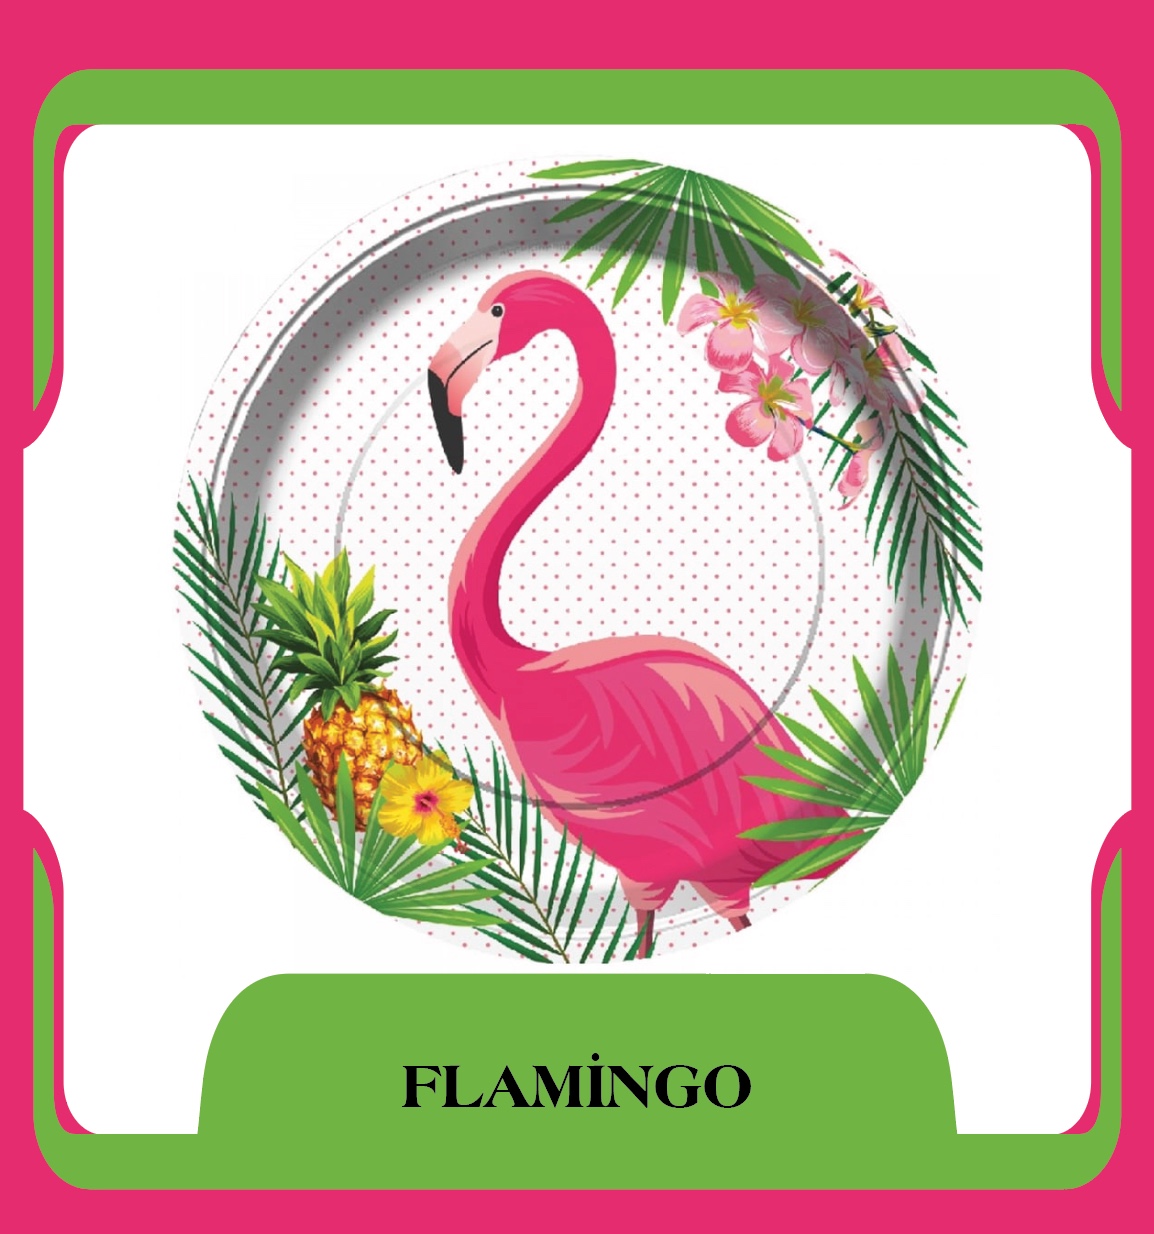 flamingo.jpg (296 KB)